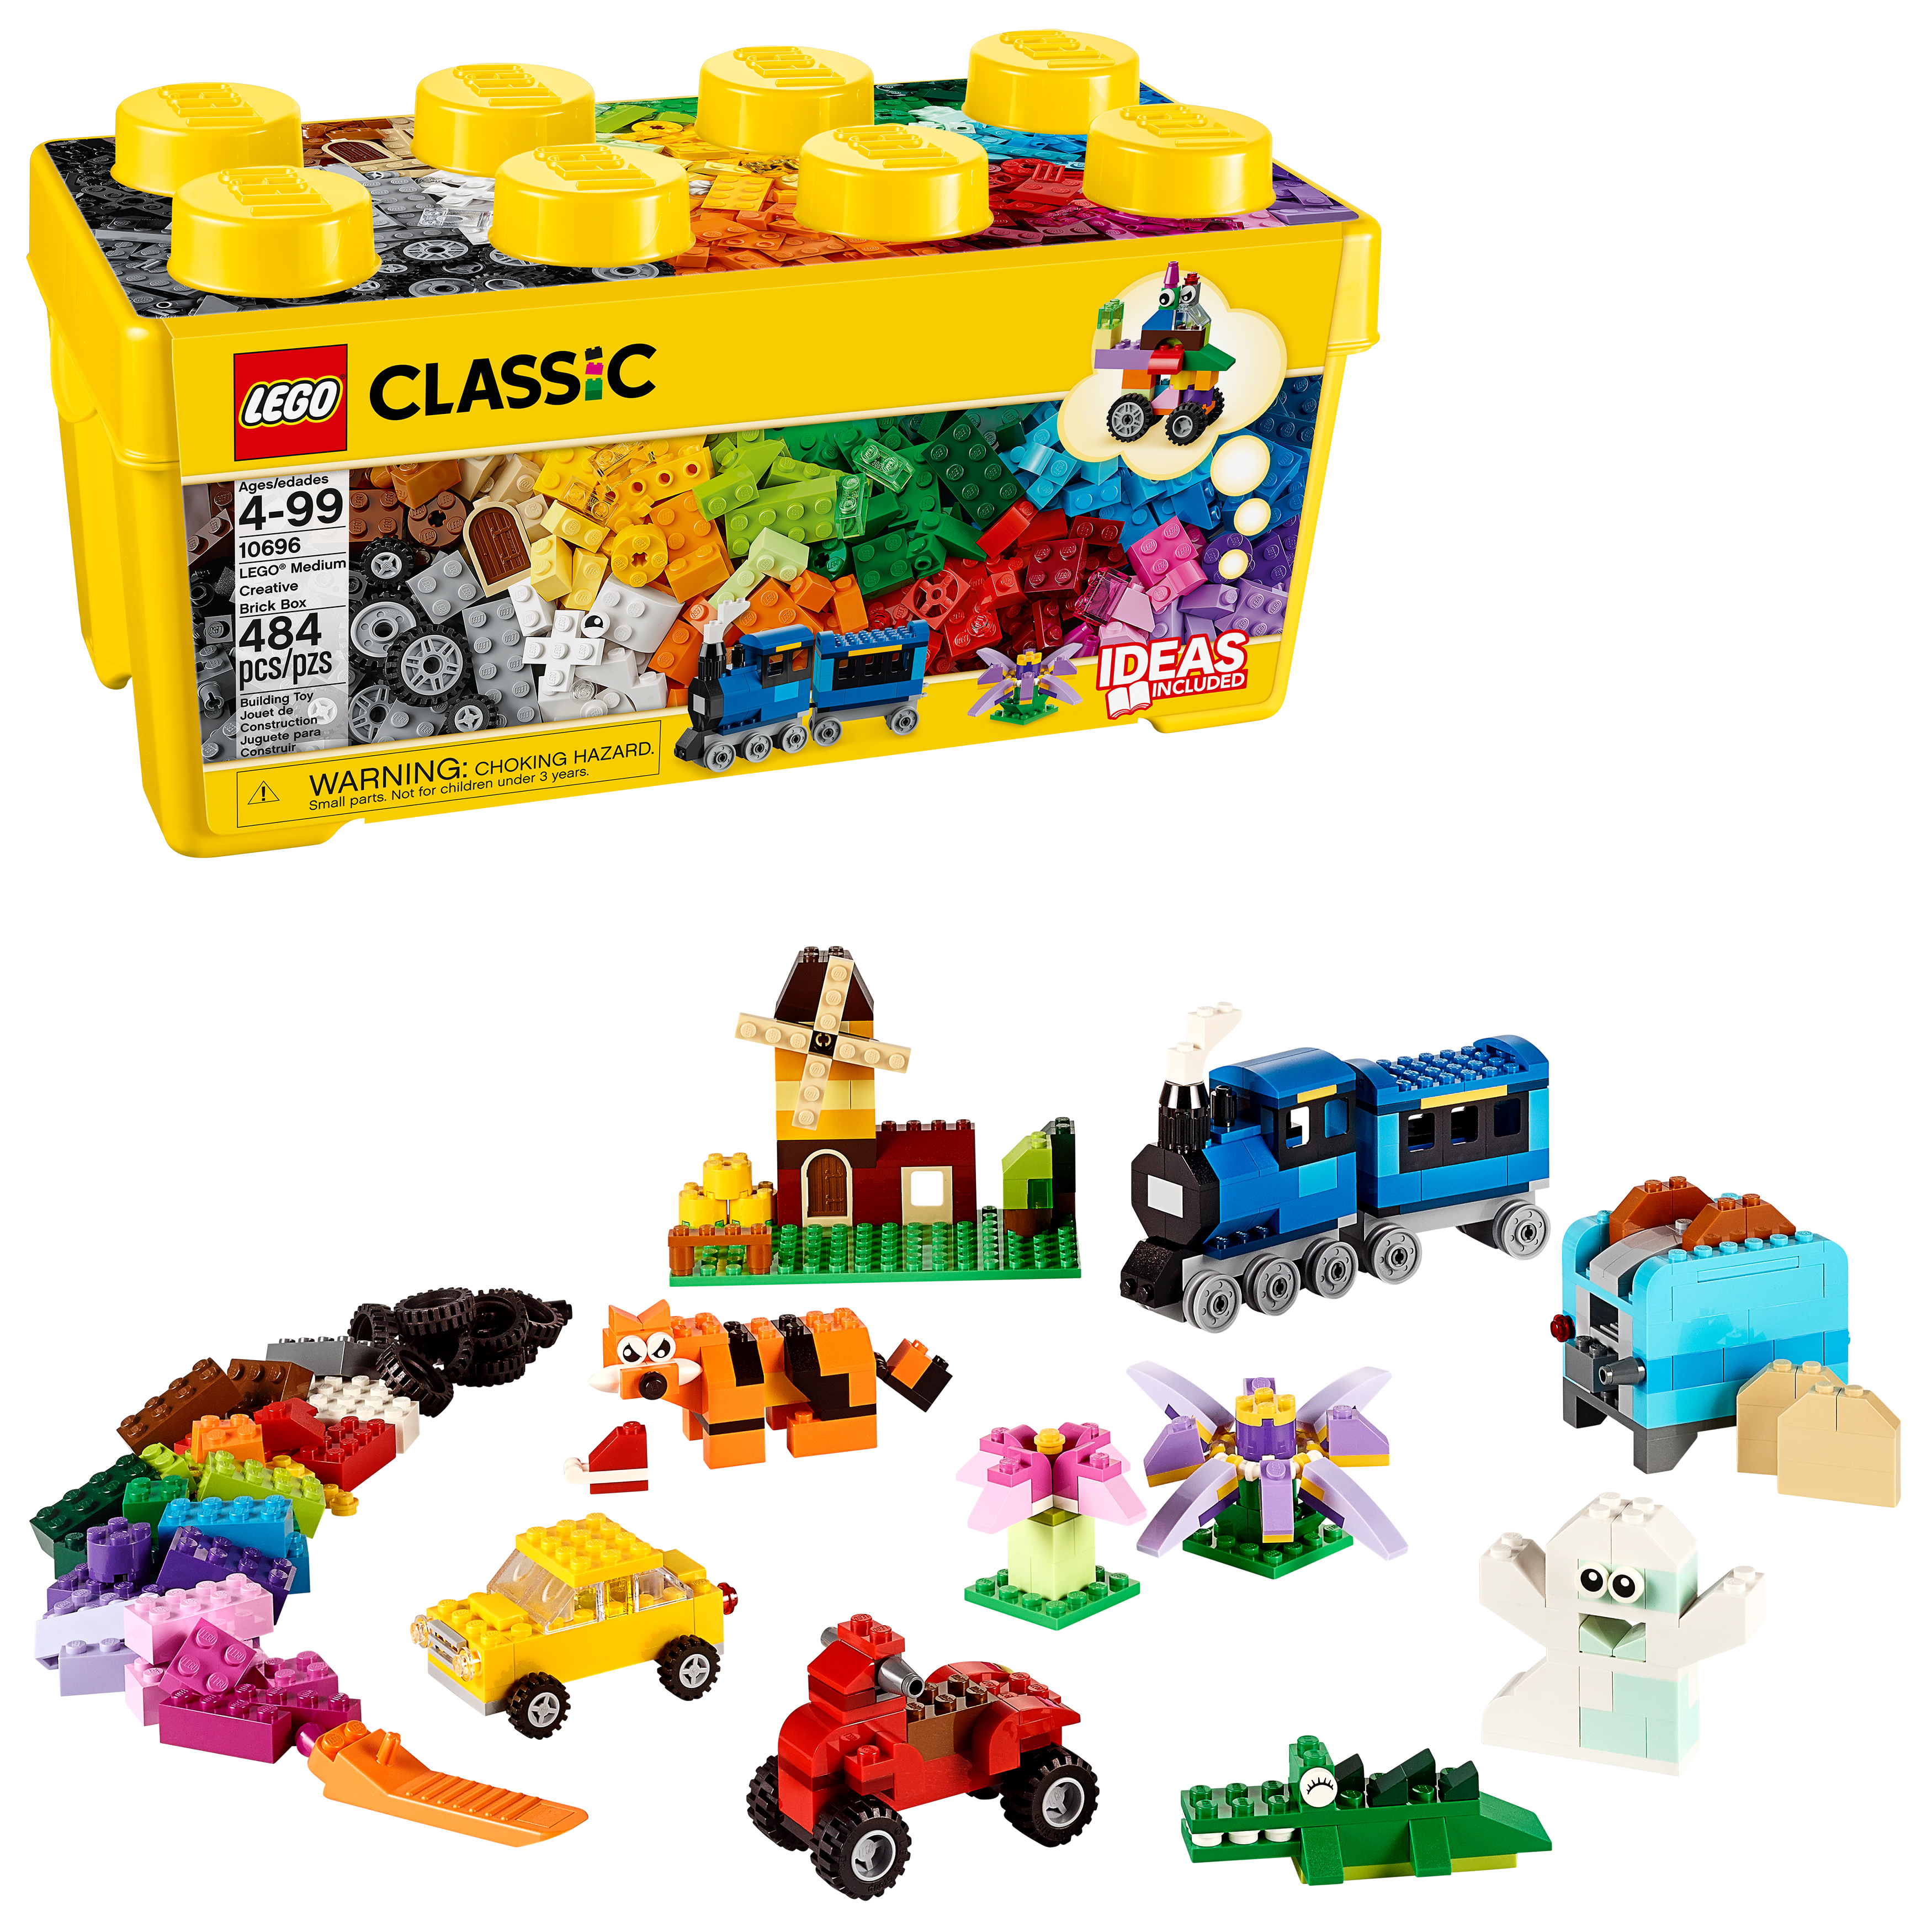 Lego Classic Medium Creative Brick Box 10696 Creative Building Toy regarding measurements 3500 X 3500